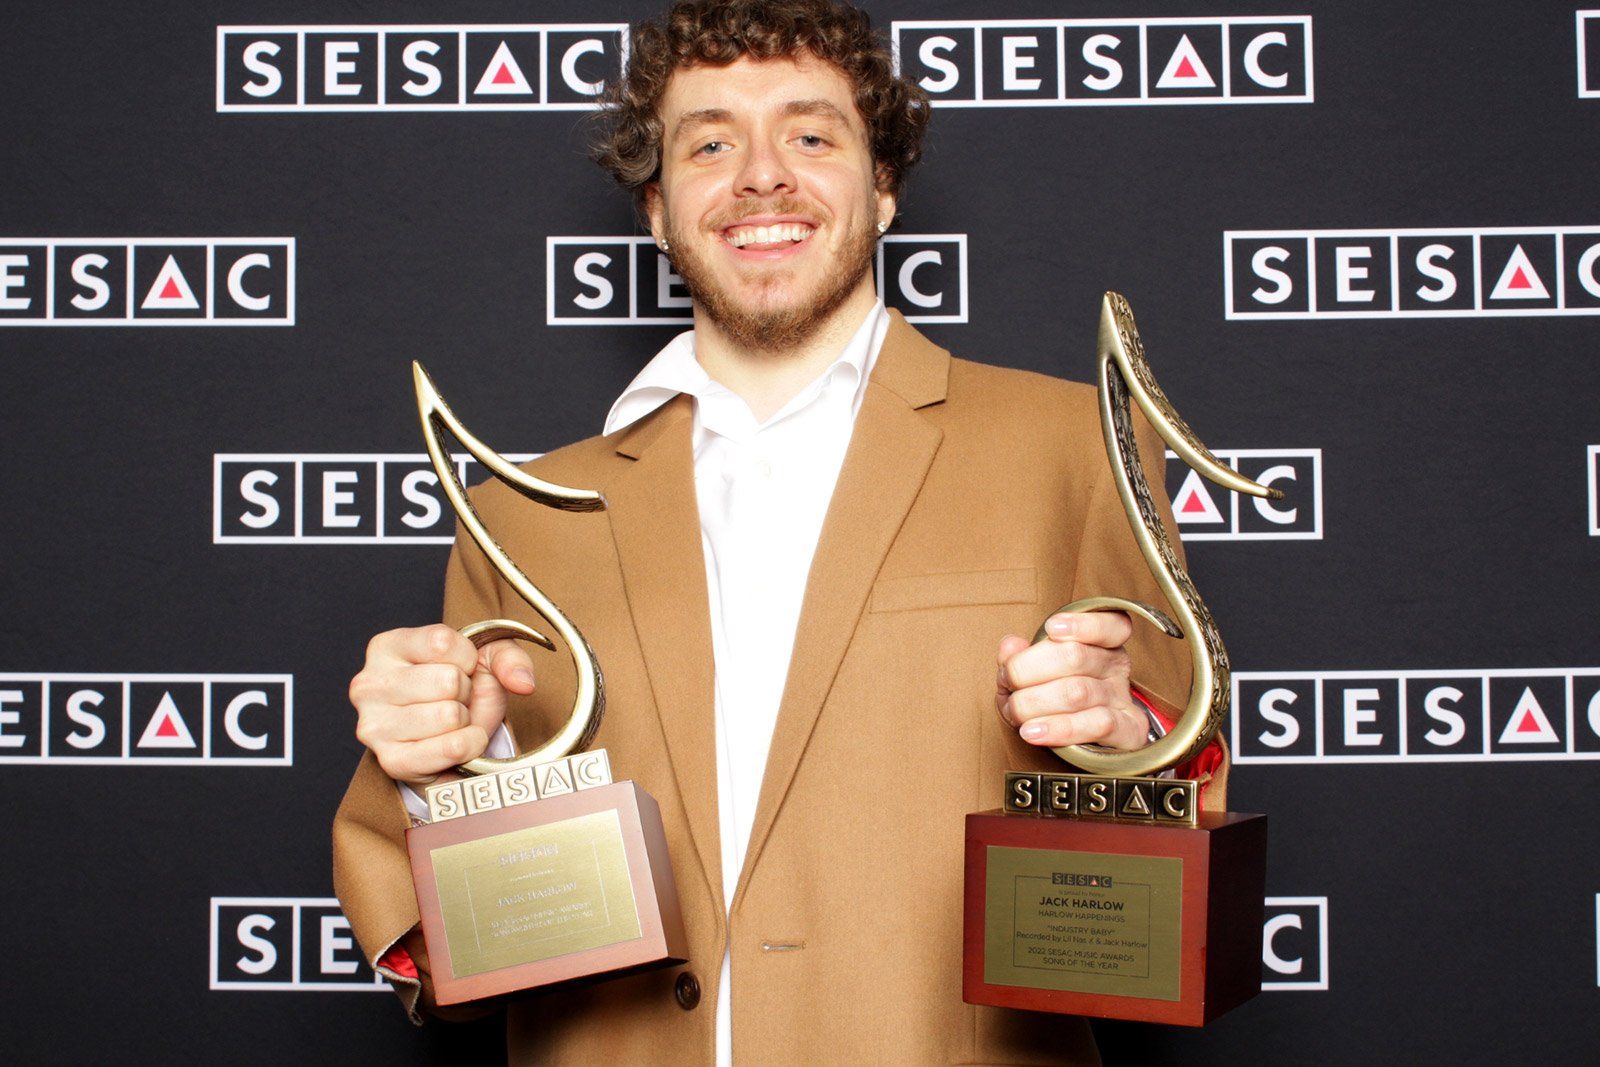 SESAC Music Awards